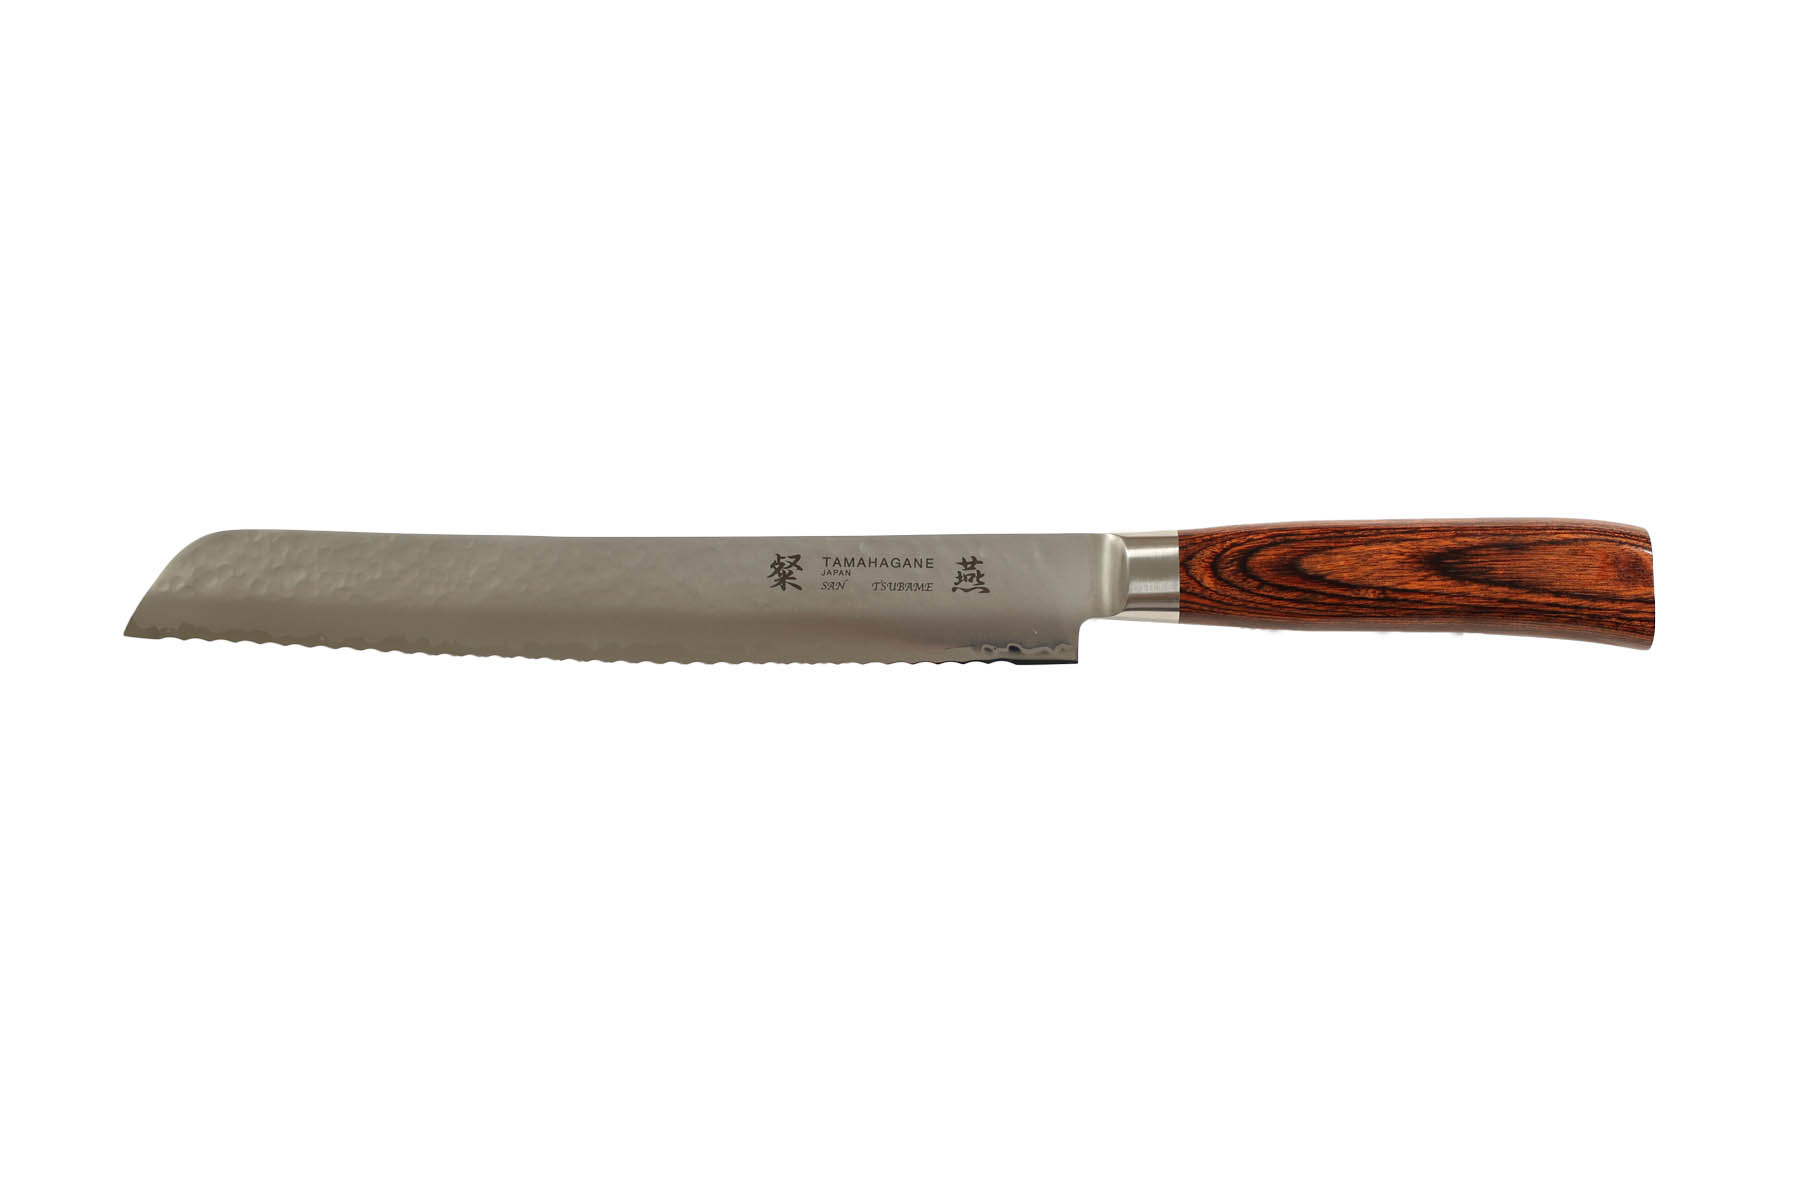 Couteau japonais Tamahagane Tsubame pakkawood - couteau à pain 23 cm